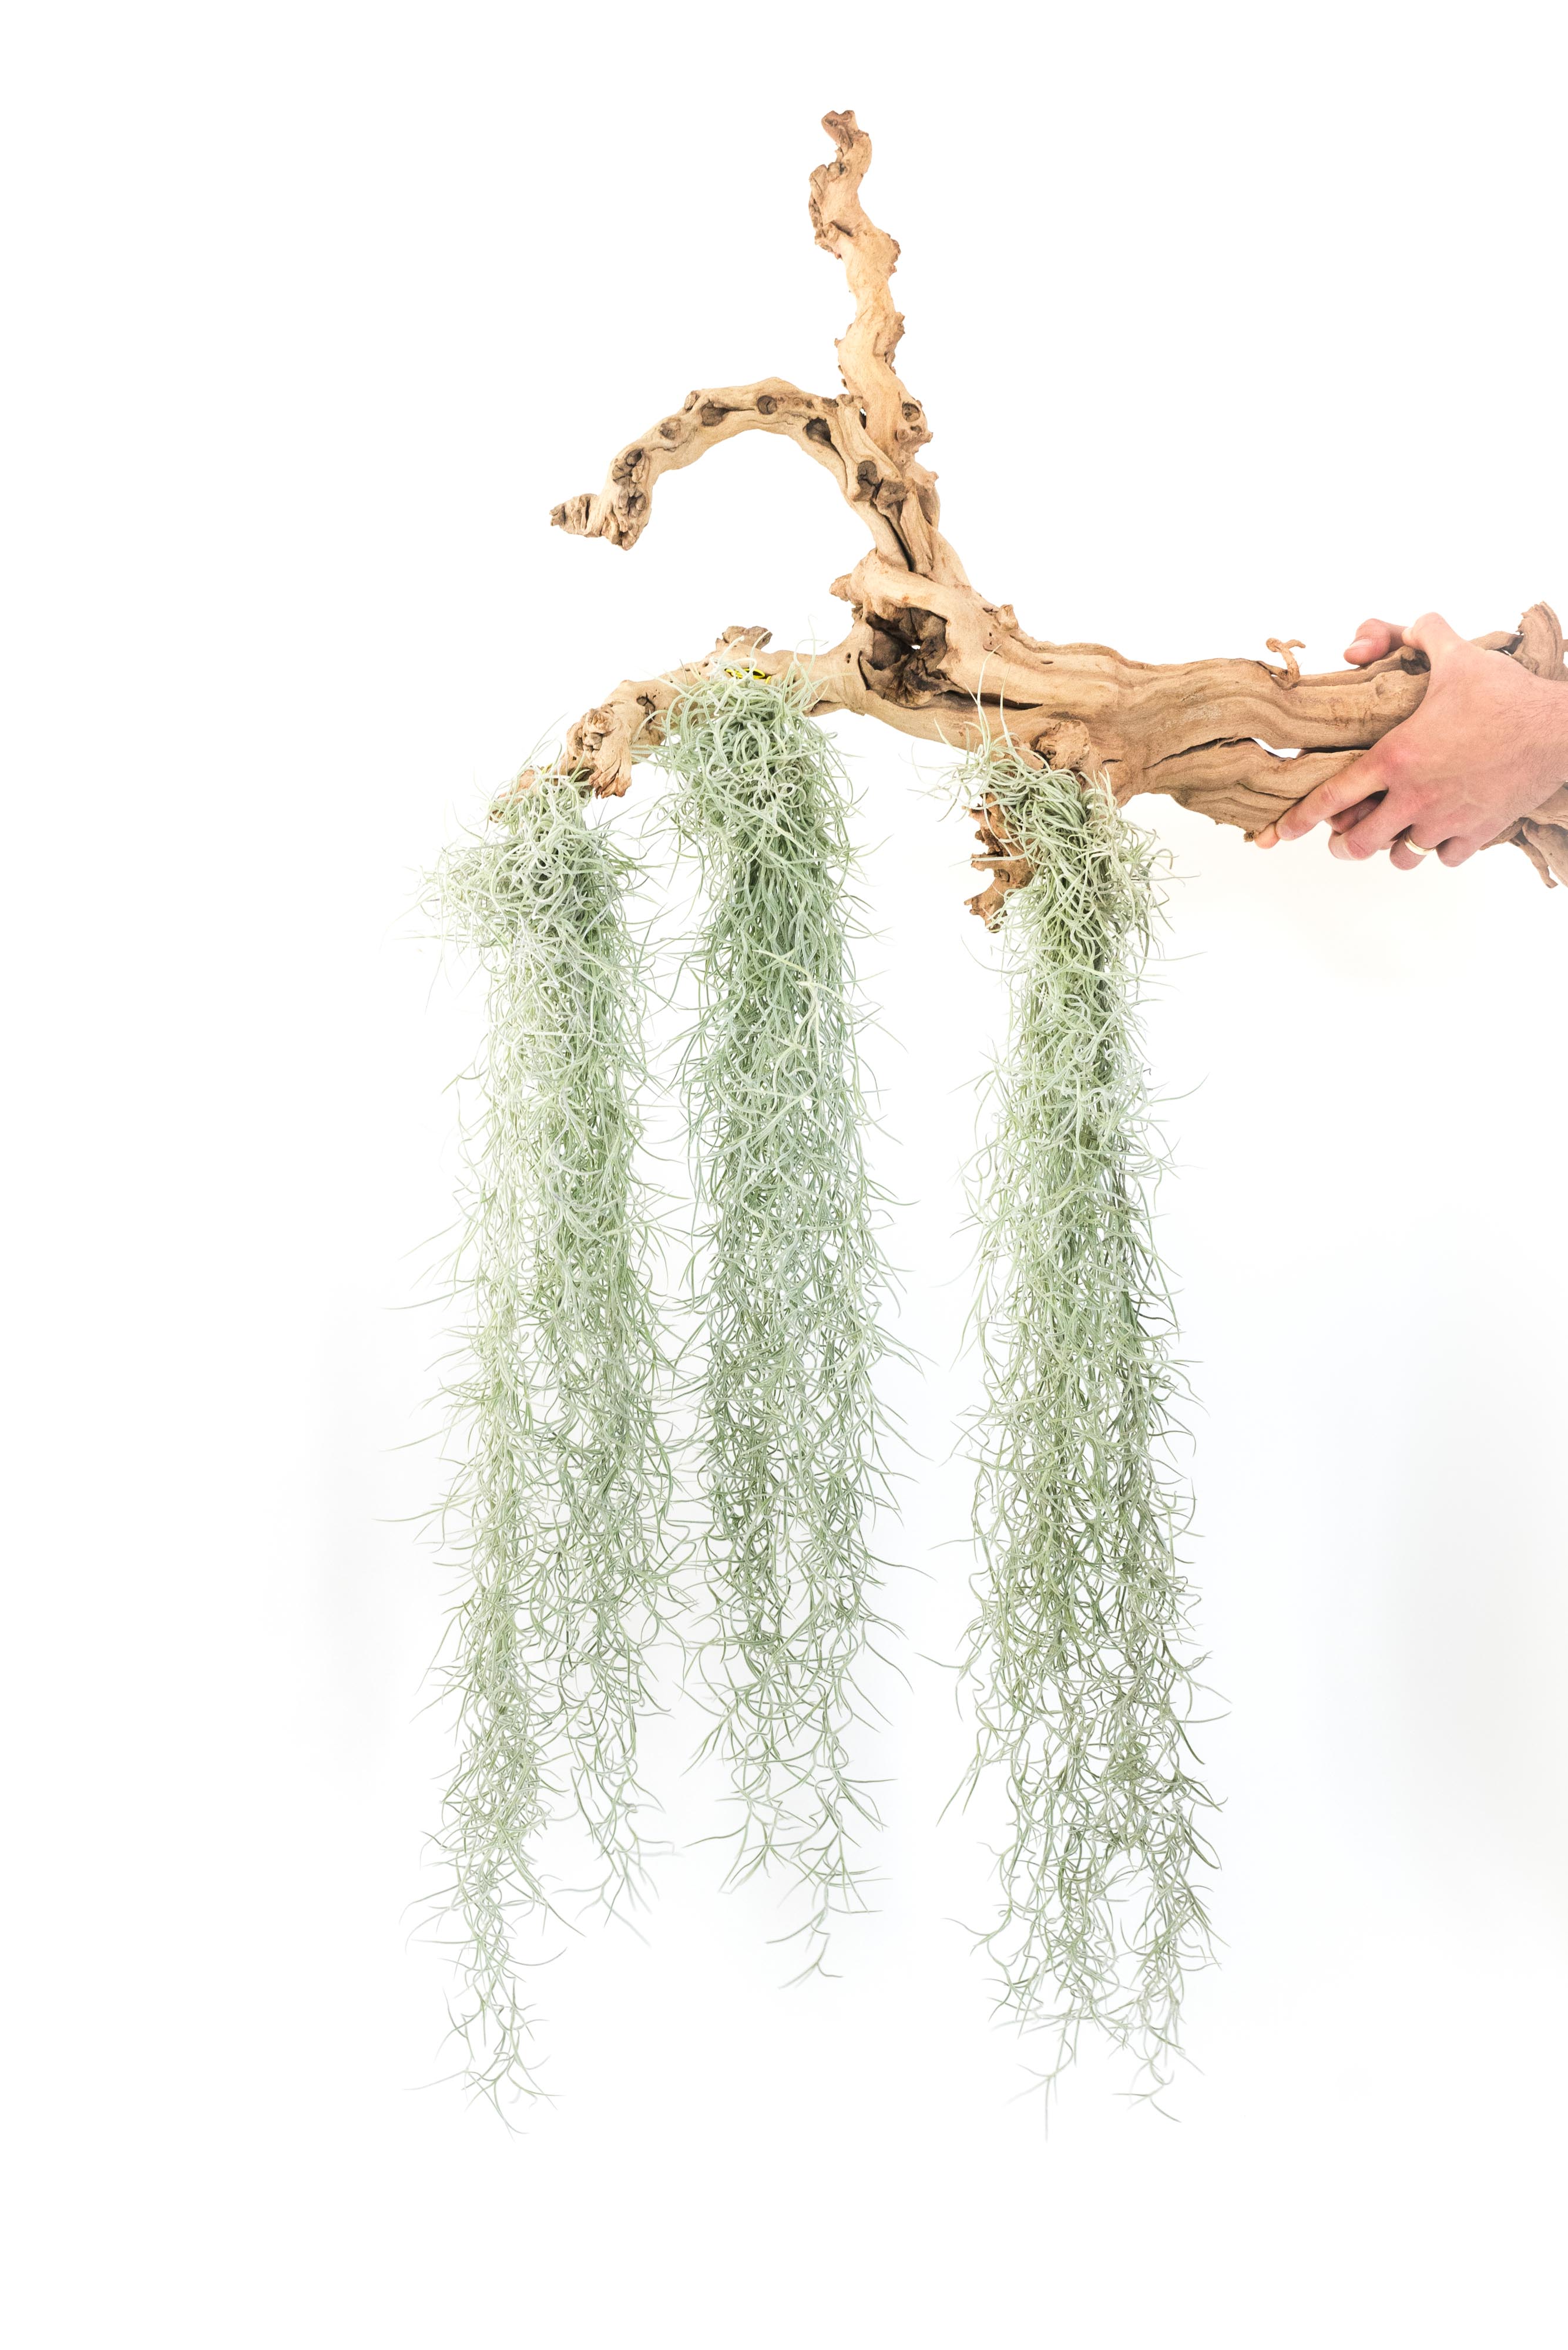 Spanish moss is beautiful, misunderstood air plant